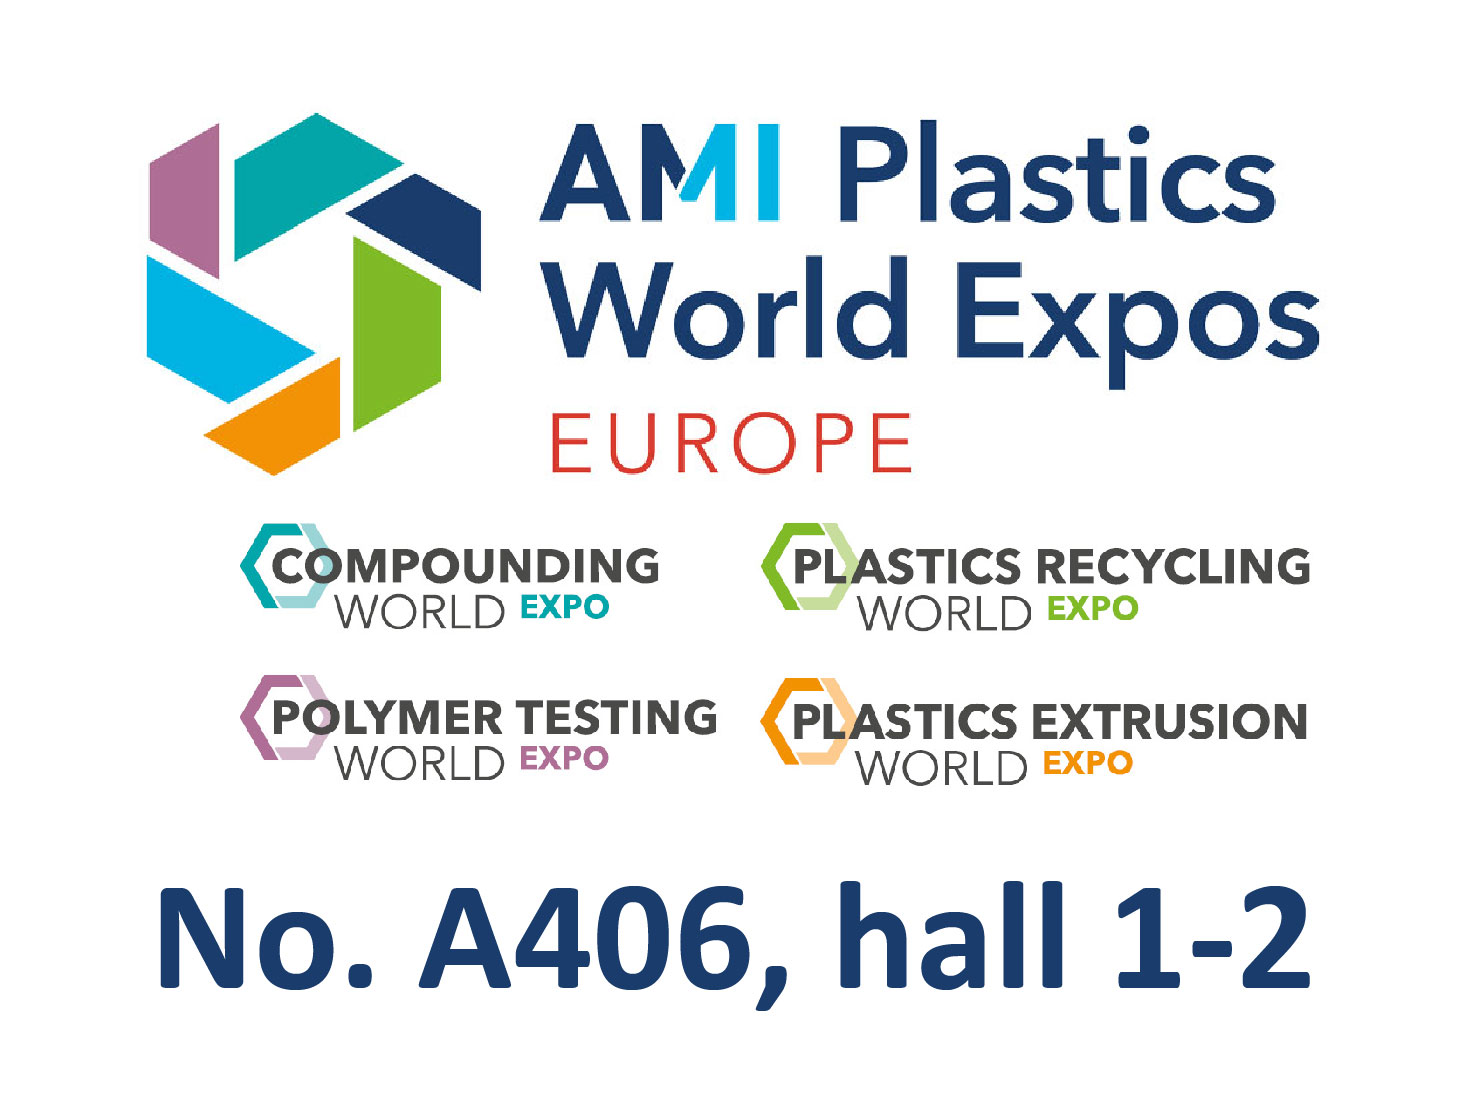 AMI Plastics World Expos EUROPE